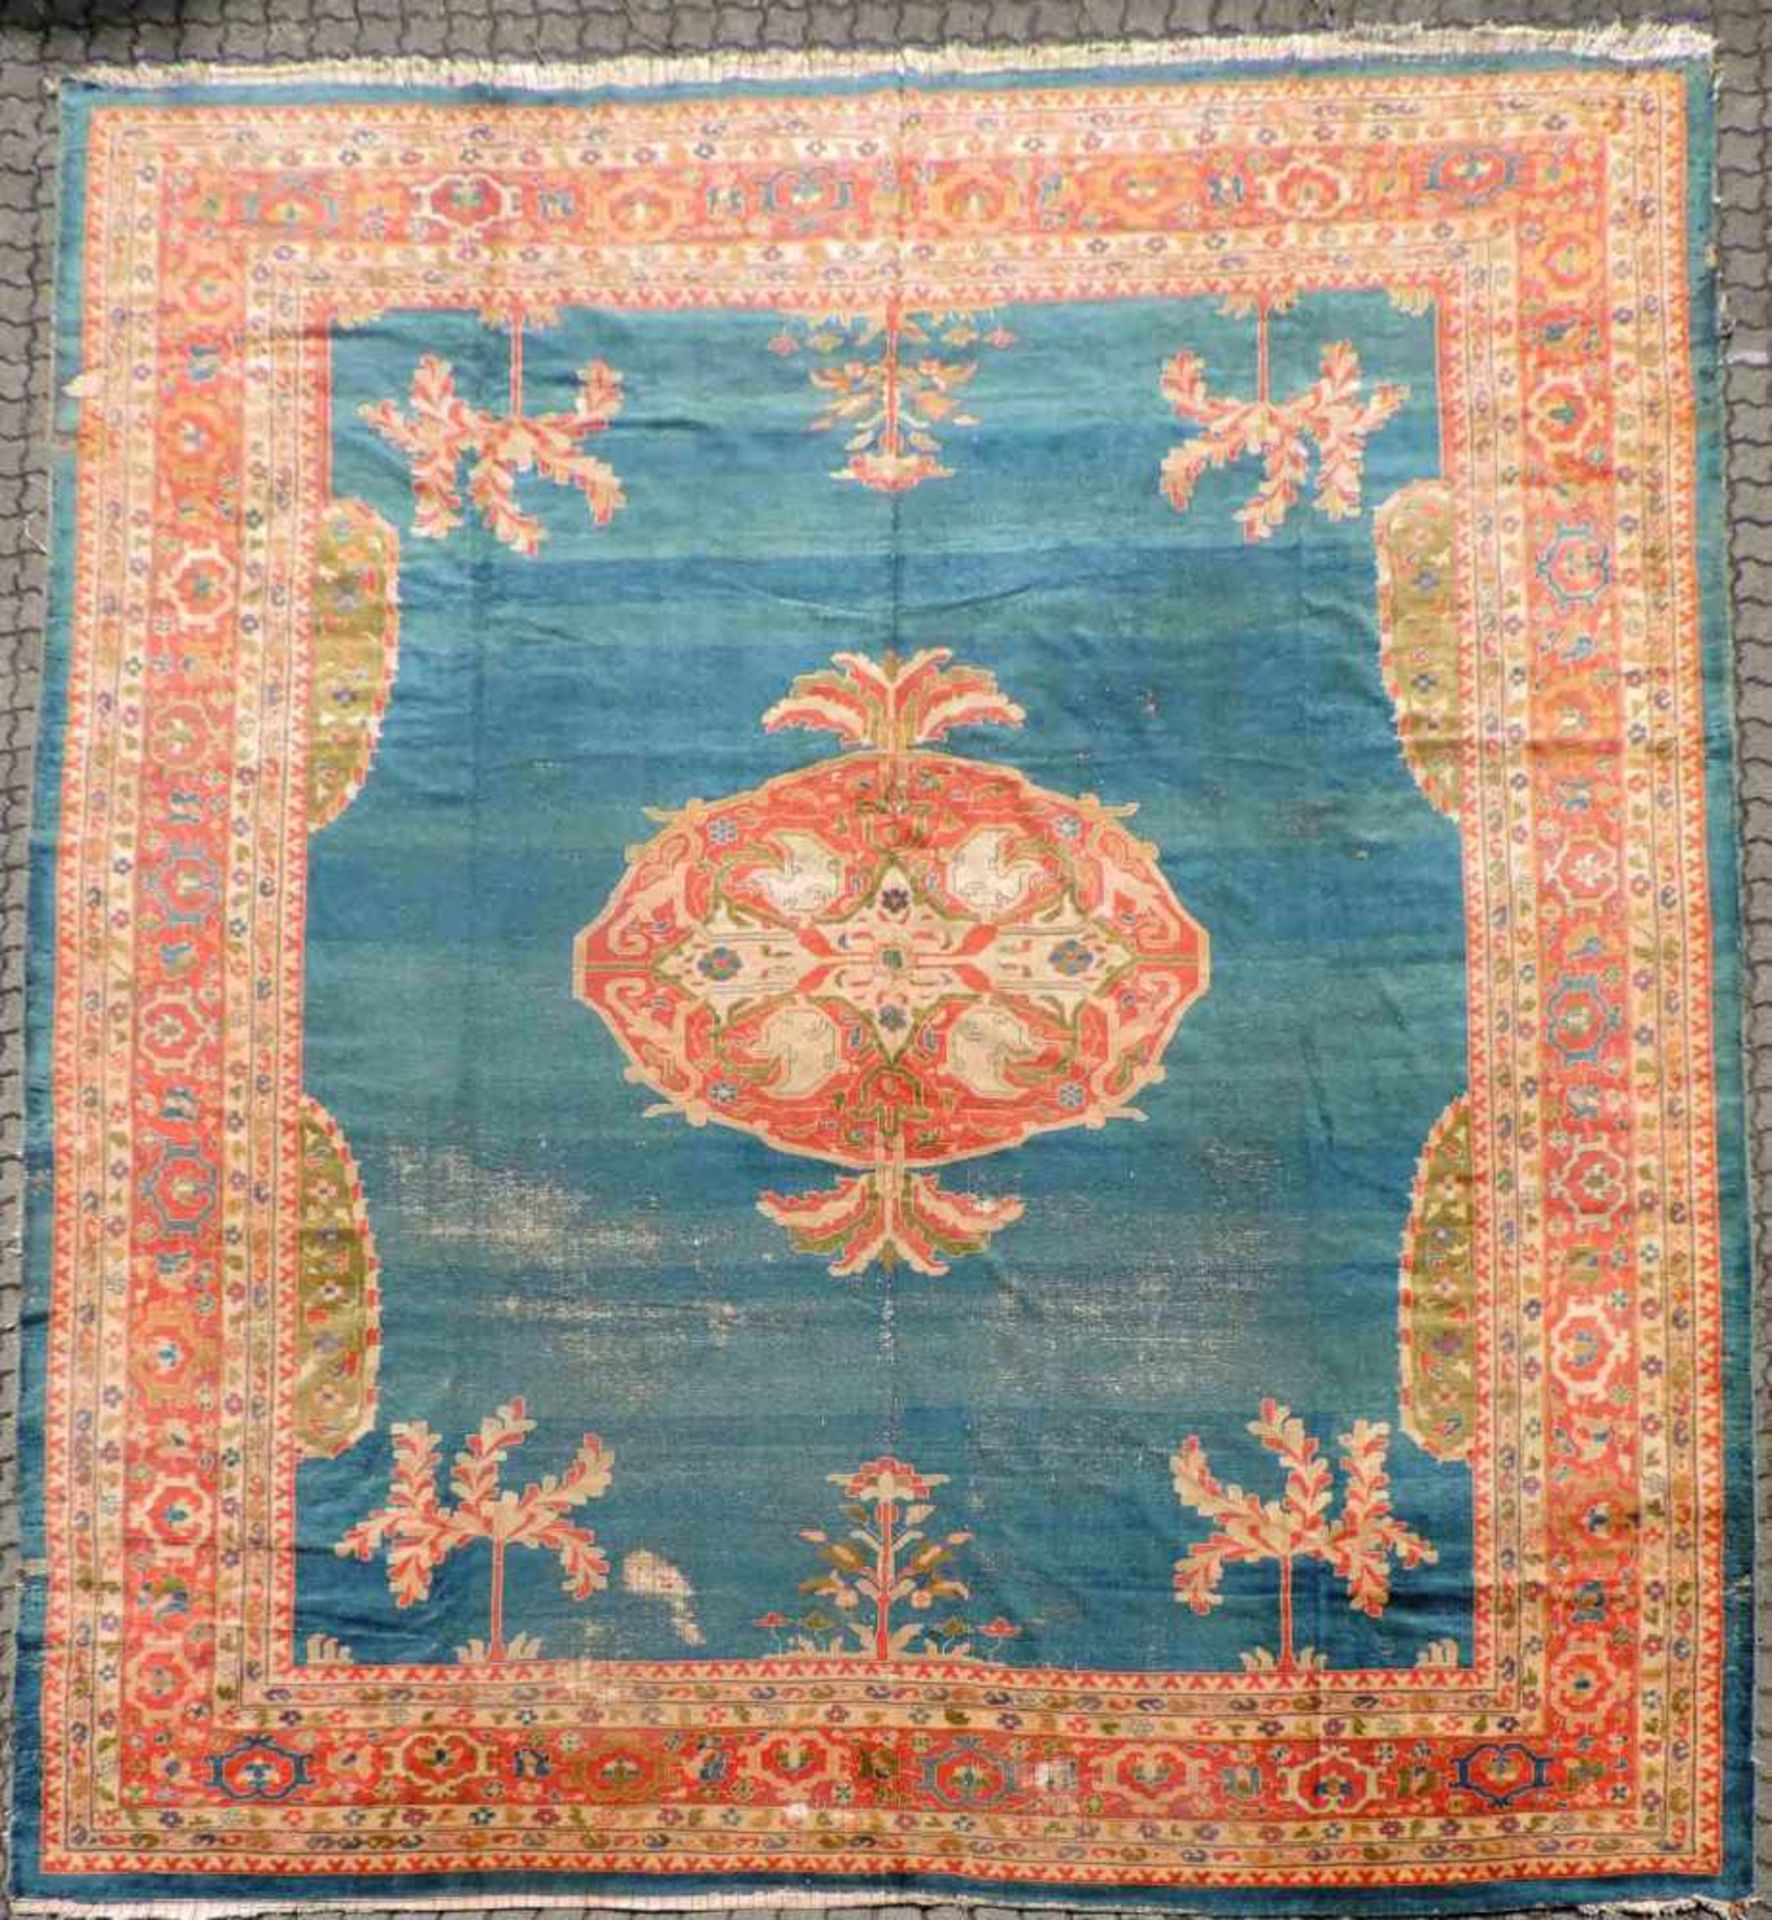 Smyrna Carpet, probably Turkey. Antique, around 1900.